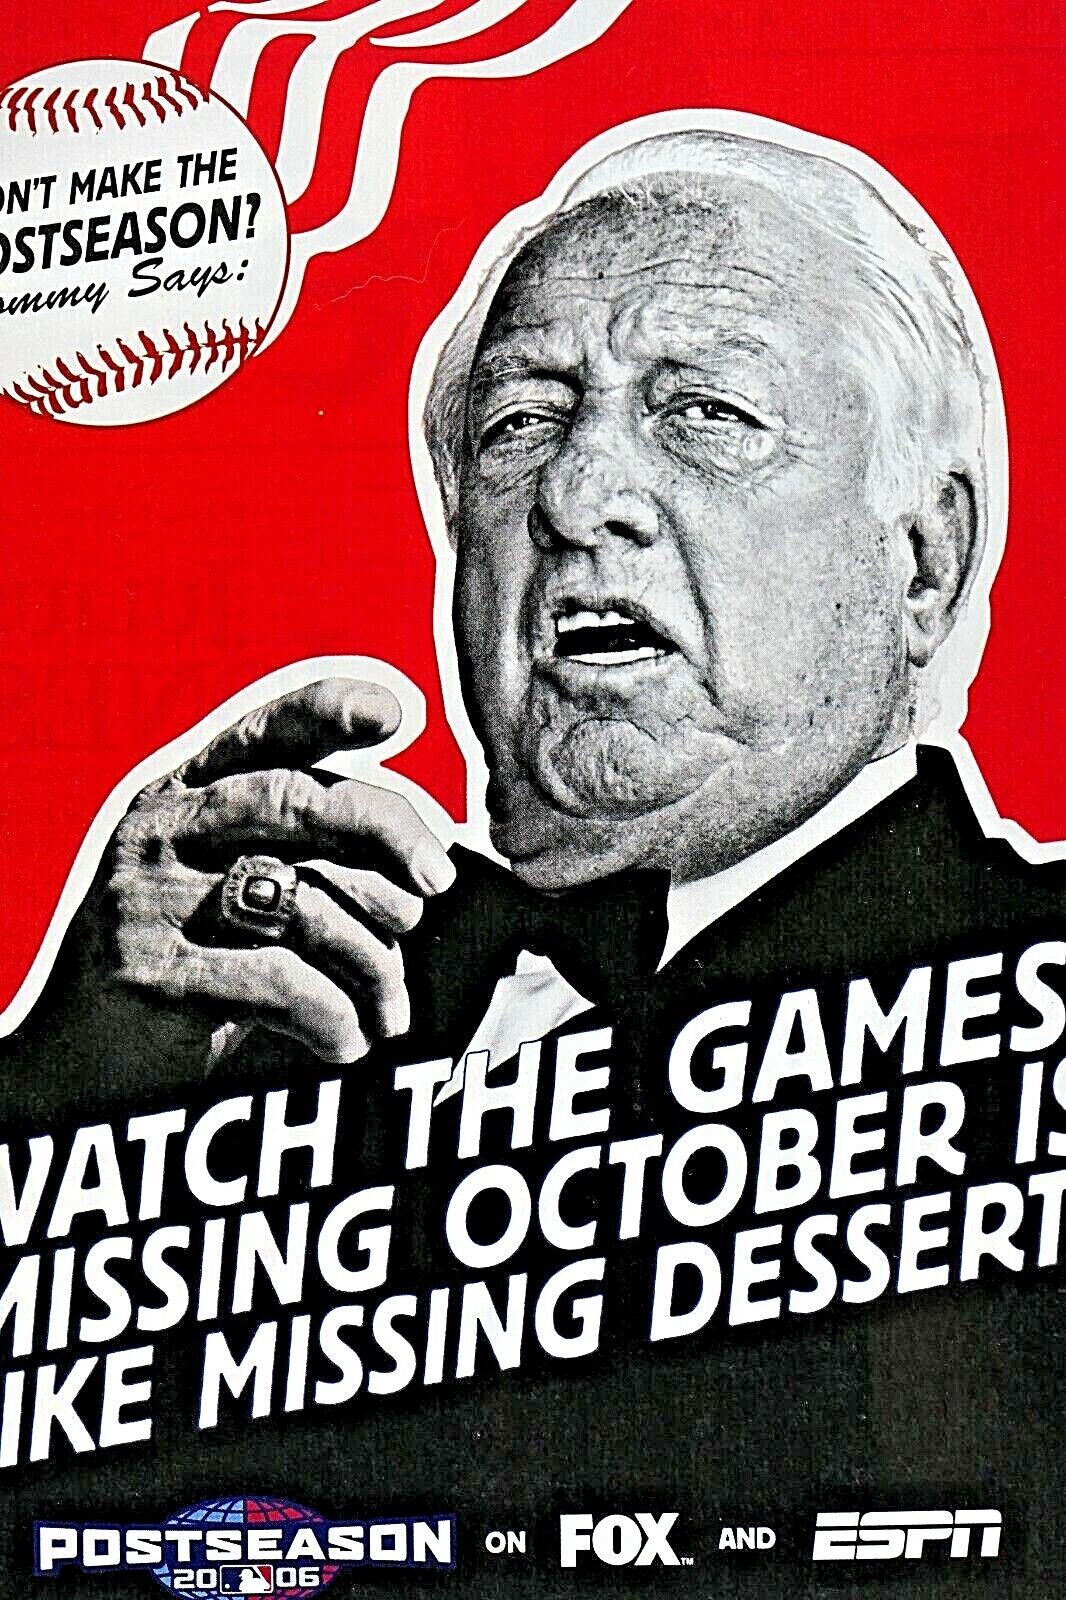 Tommy Lasorda Los Angeles Dodgers 2006 Playoffs Fox  ESPN Original Print Ad